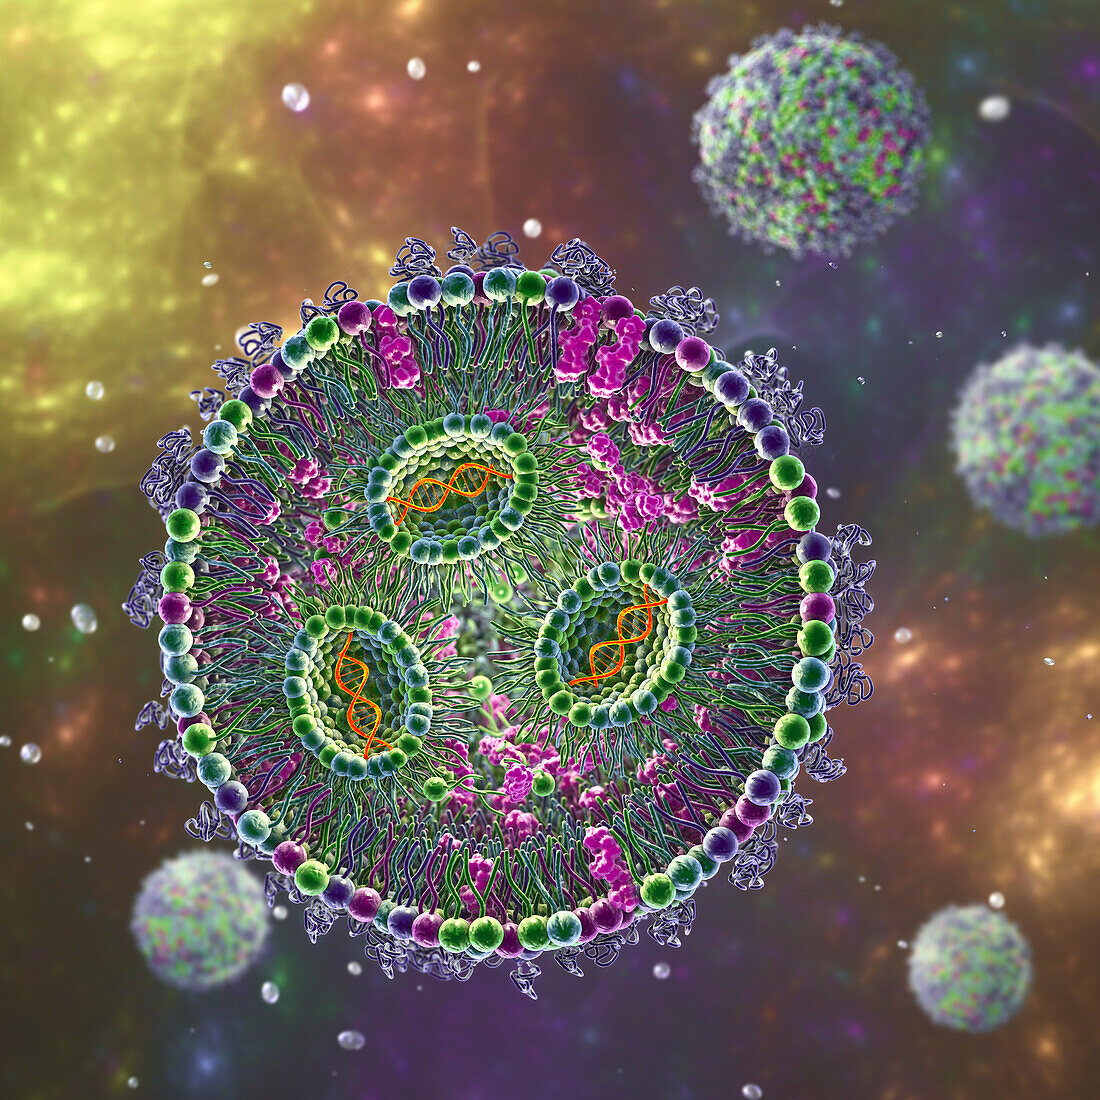 siRNA lipid nanoparticle antiviral, illustration